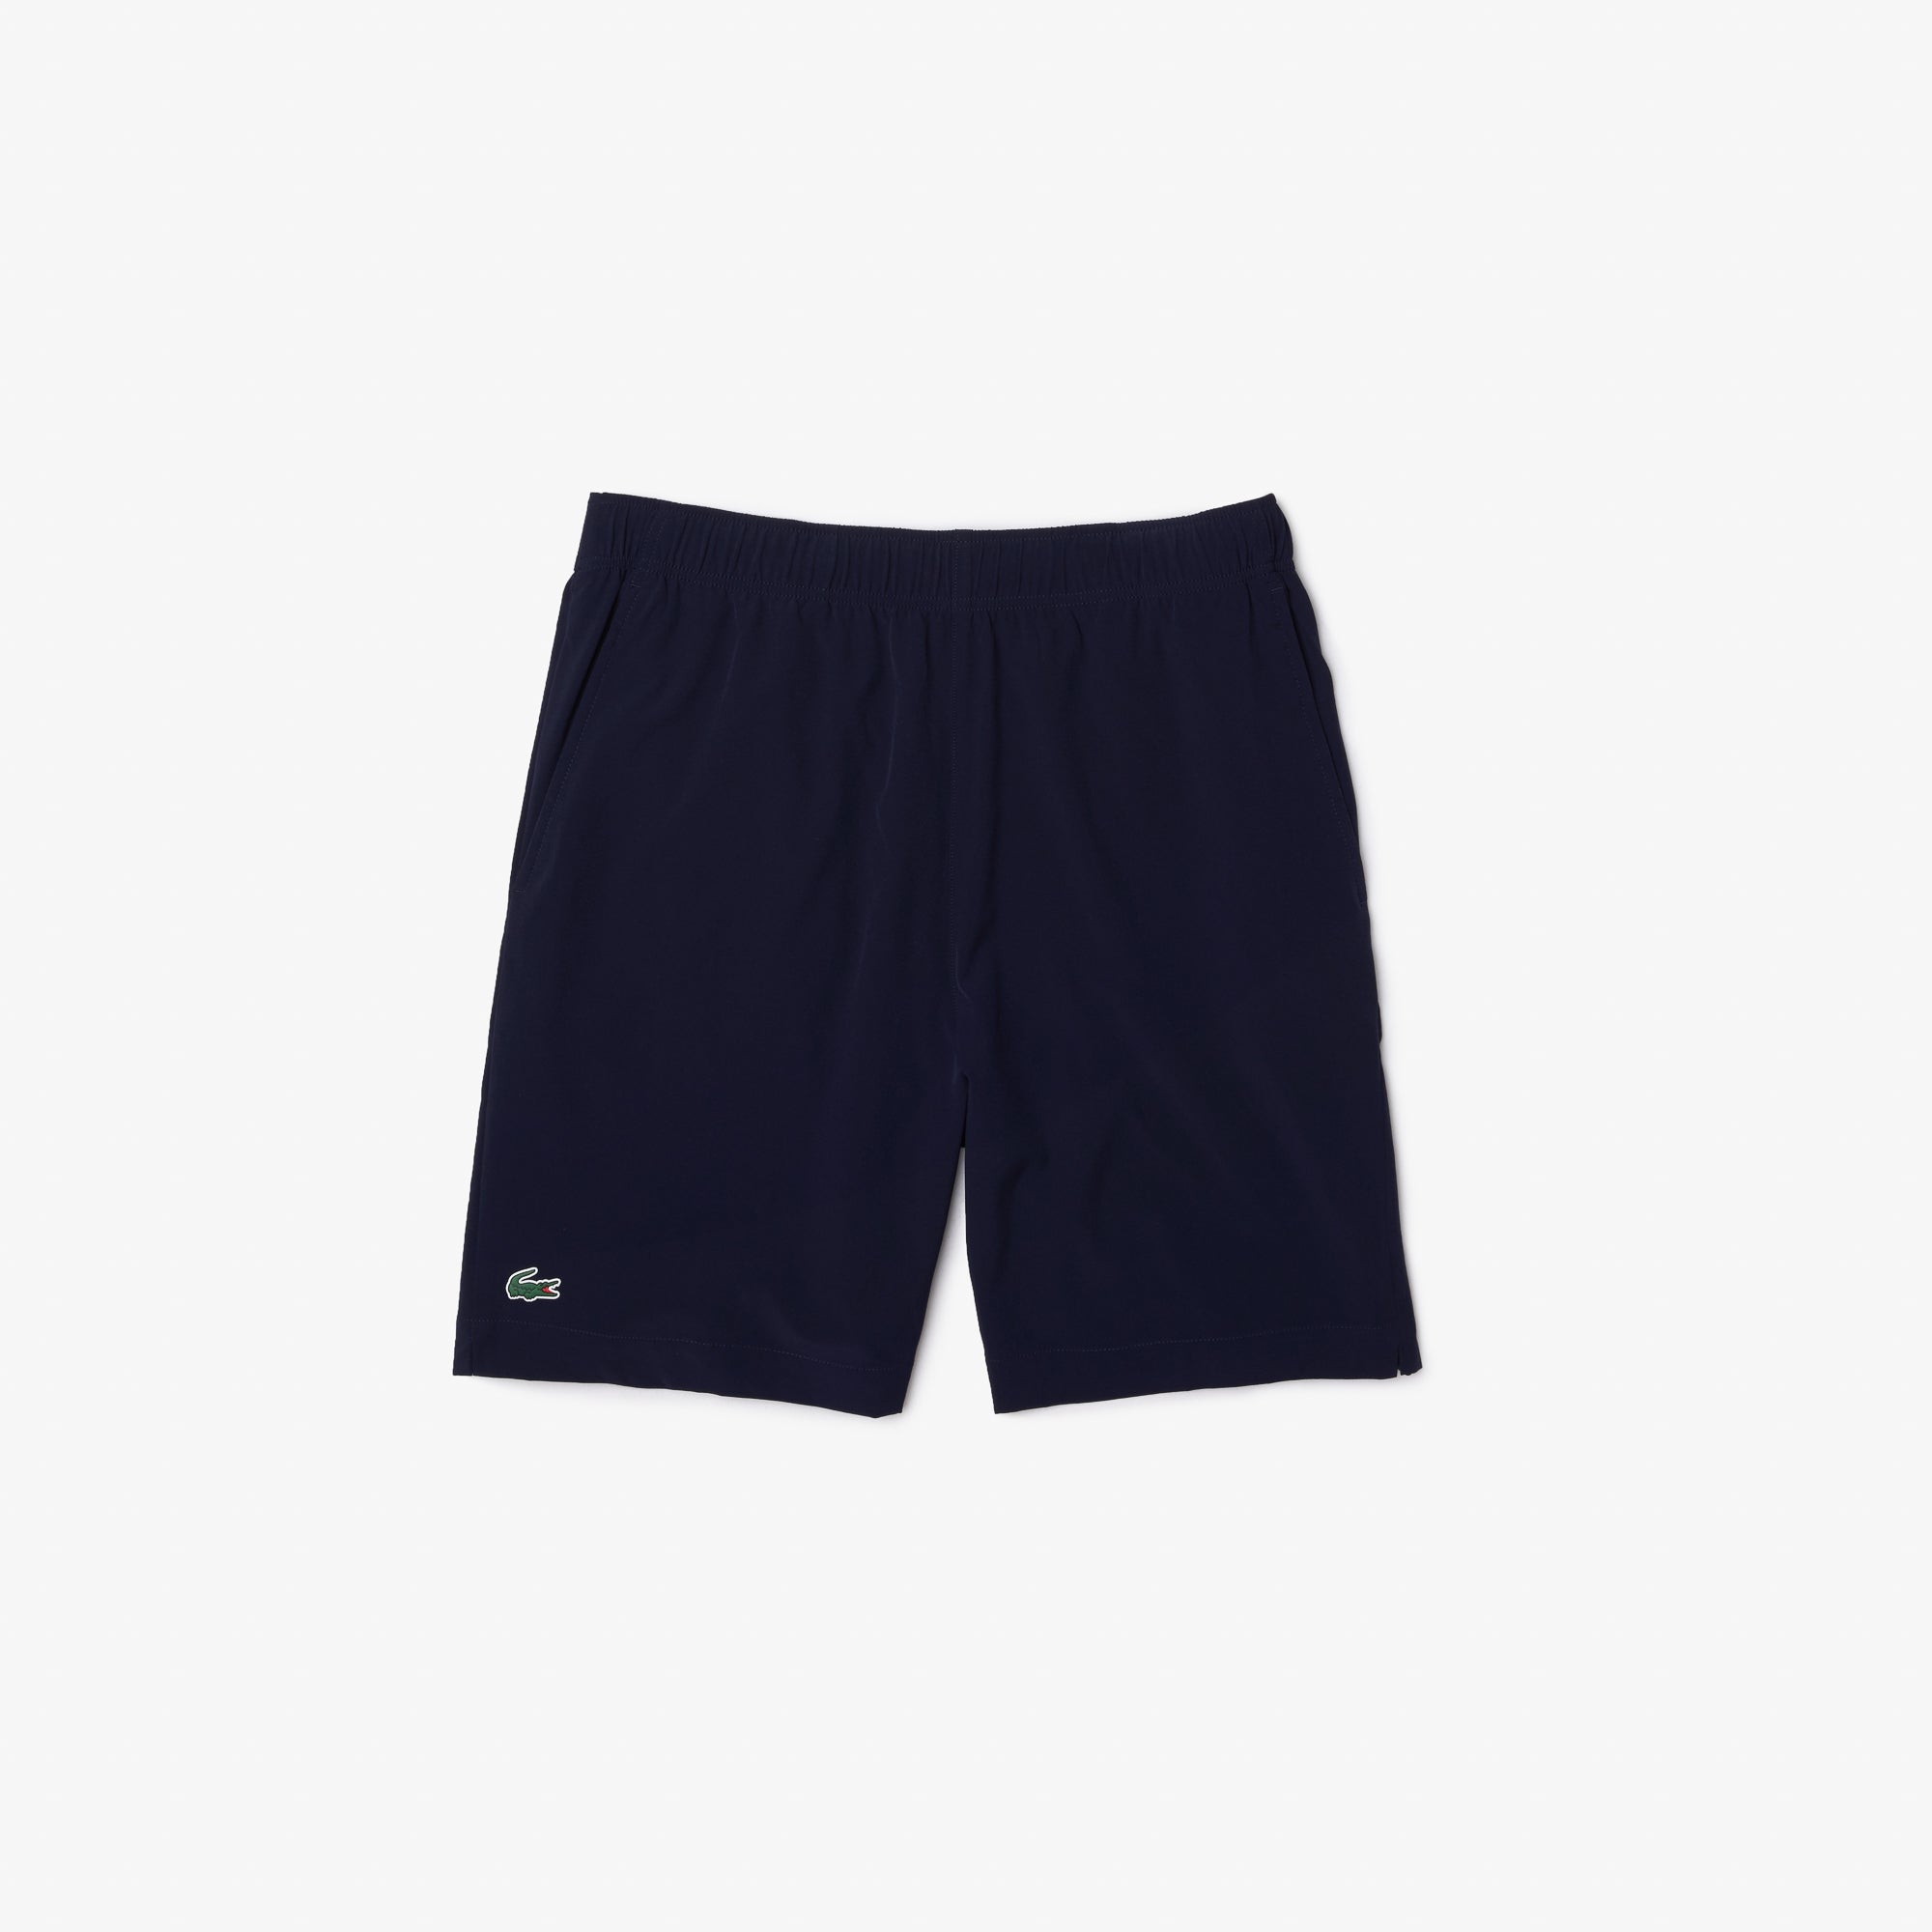 Lacoste Shorts (Navy) - S